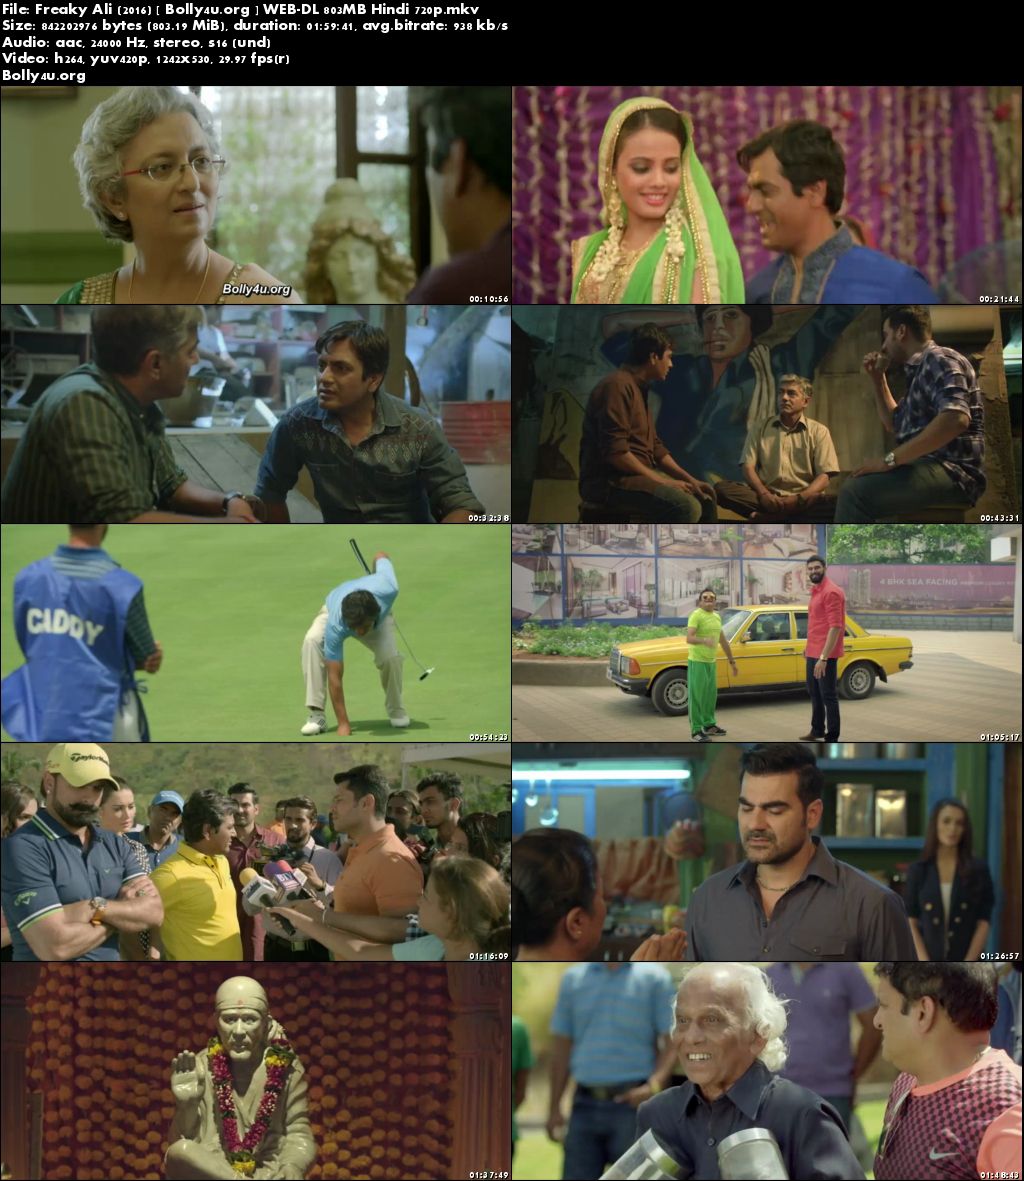 Freaky Ali 2016 WEB-DL 350MB Full Hindi Movie Download 480p